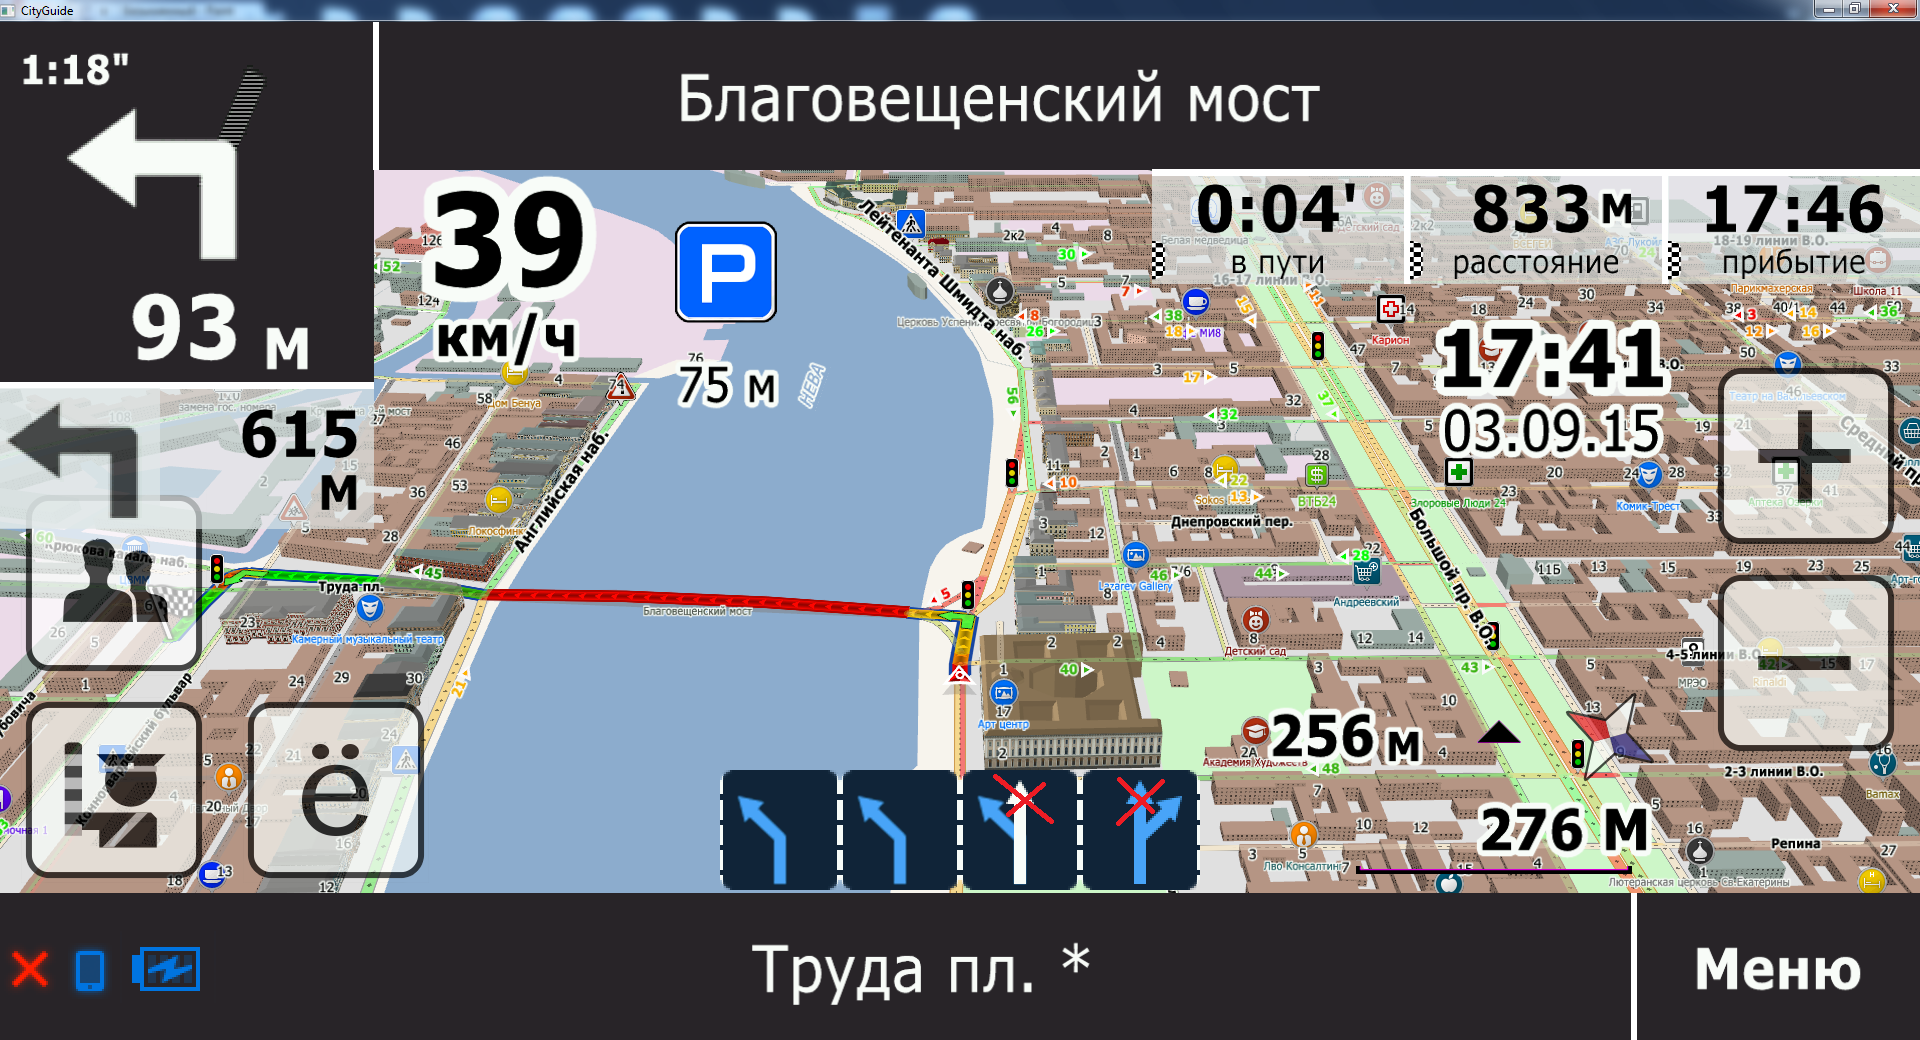 City guidexxx - 🧡 CityGuide на Андроид v7.8.352 полная версия.